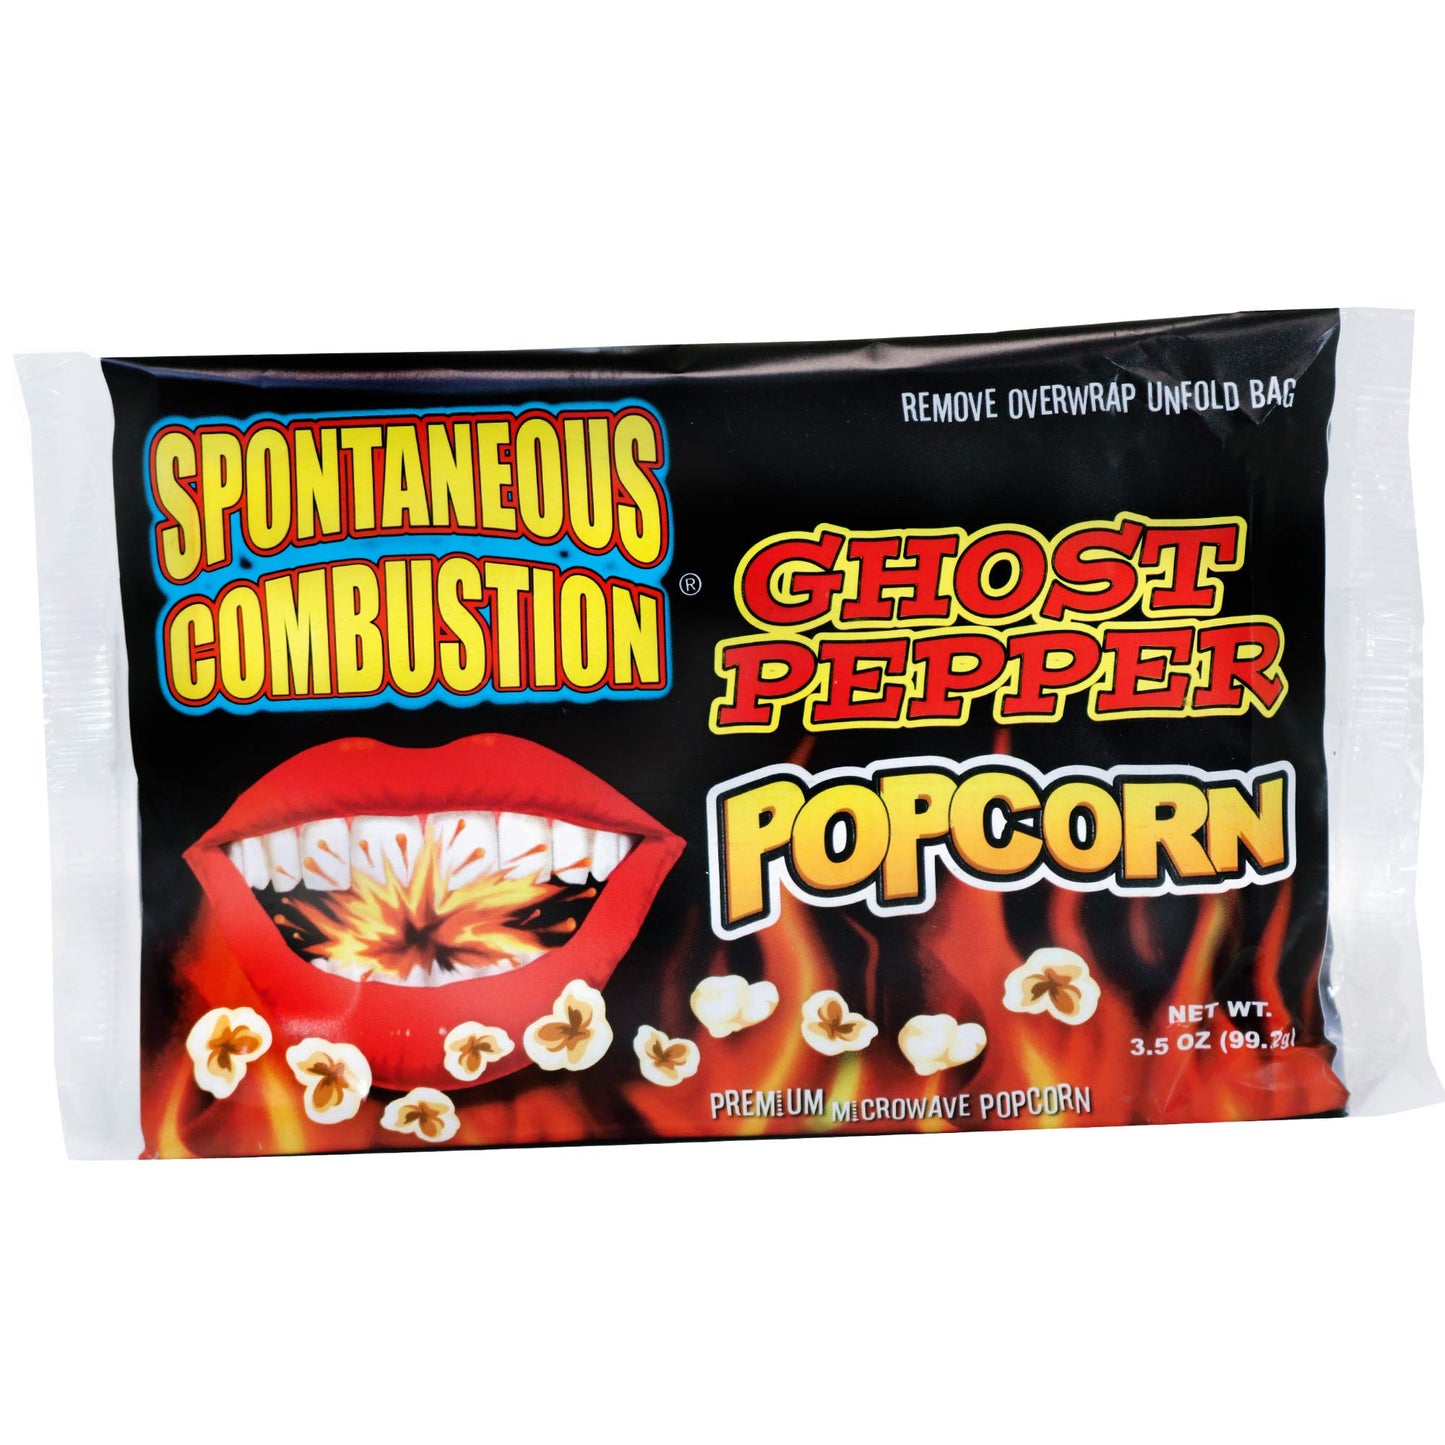 Popcorn ghost pepper